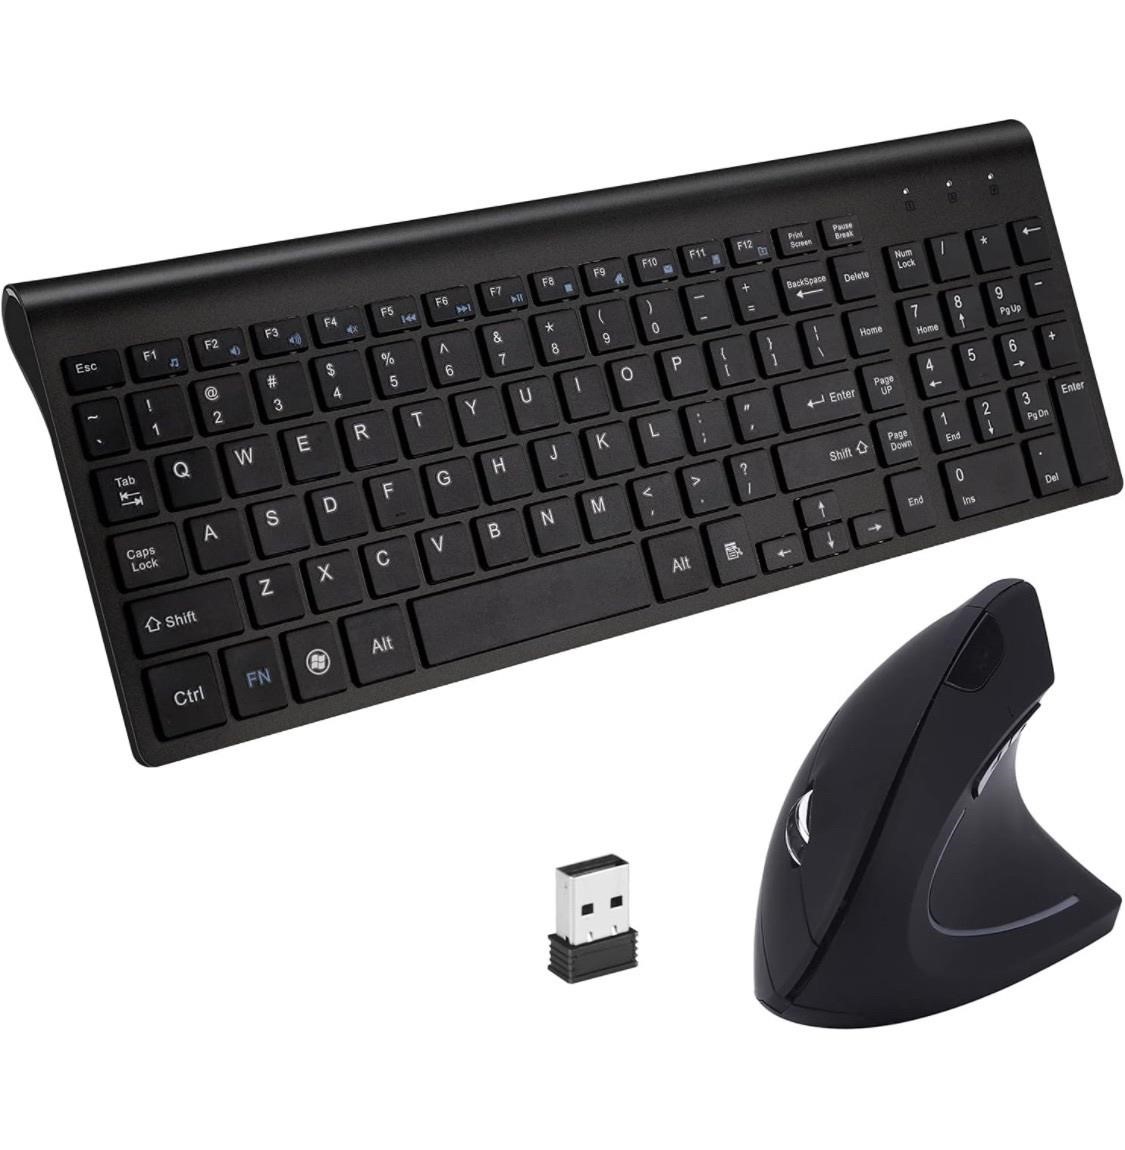 2.4GHz Wireless Vertical Ergonomic Mouse& Keyboard